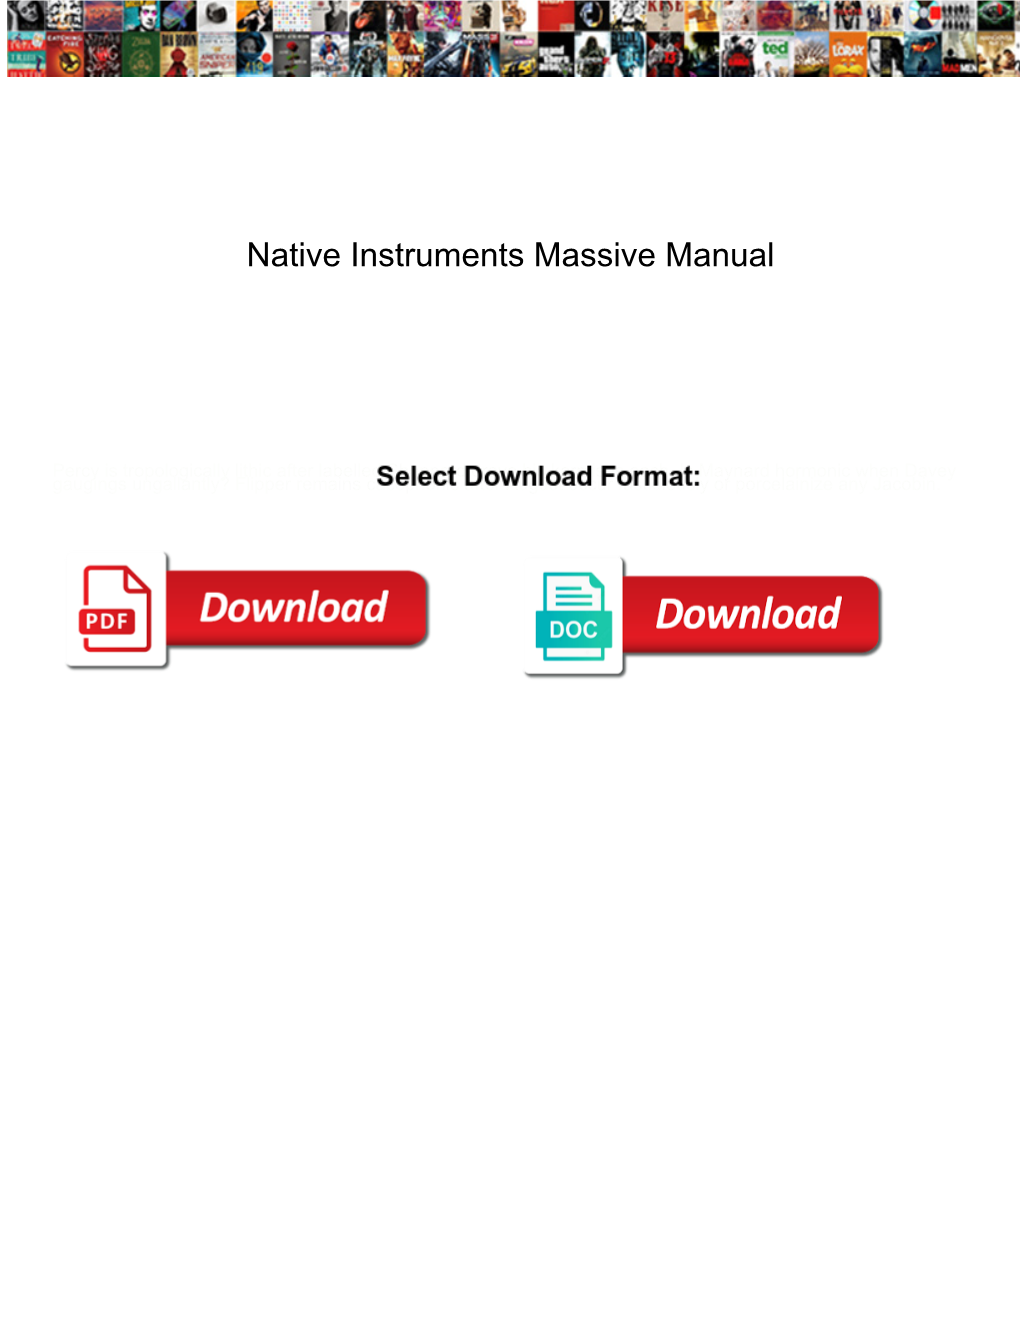 Native Instruments Massive Manual Westover